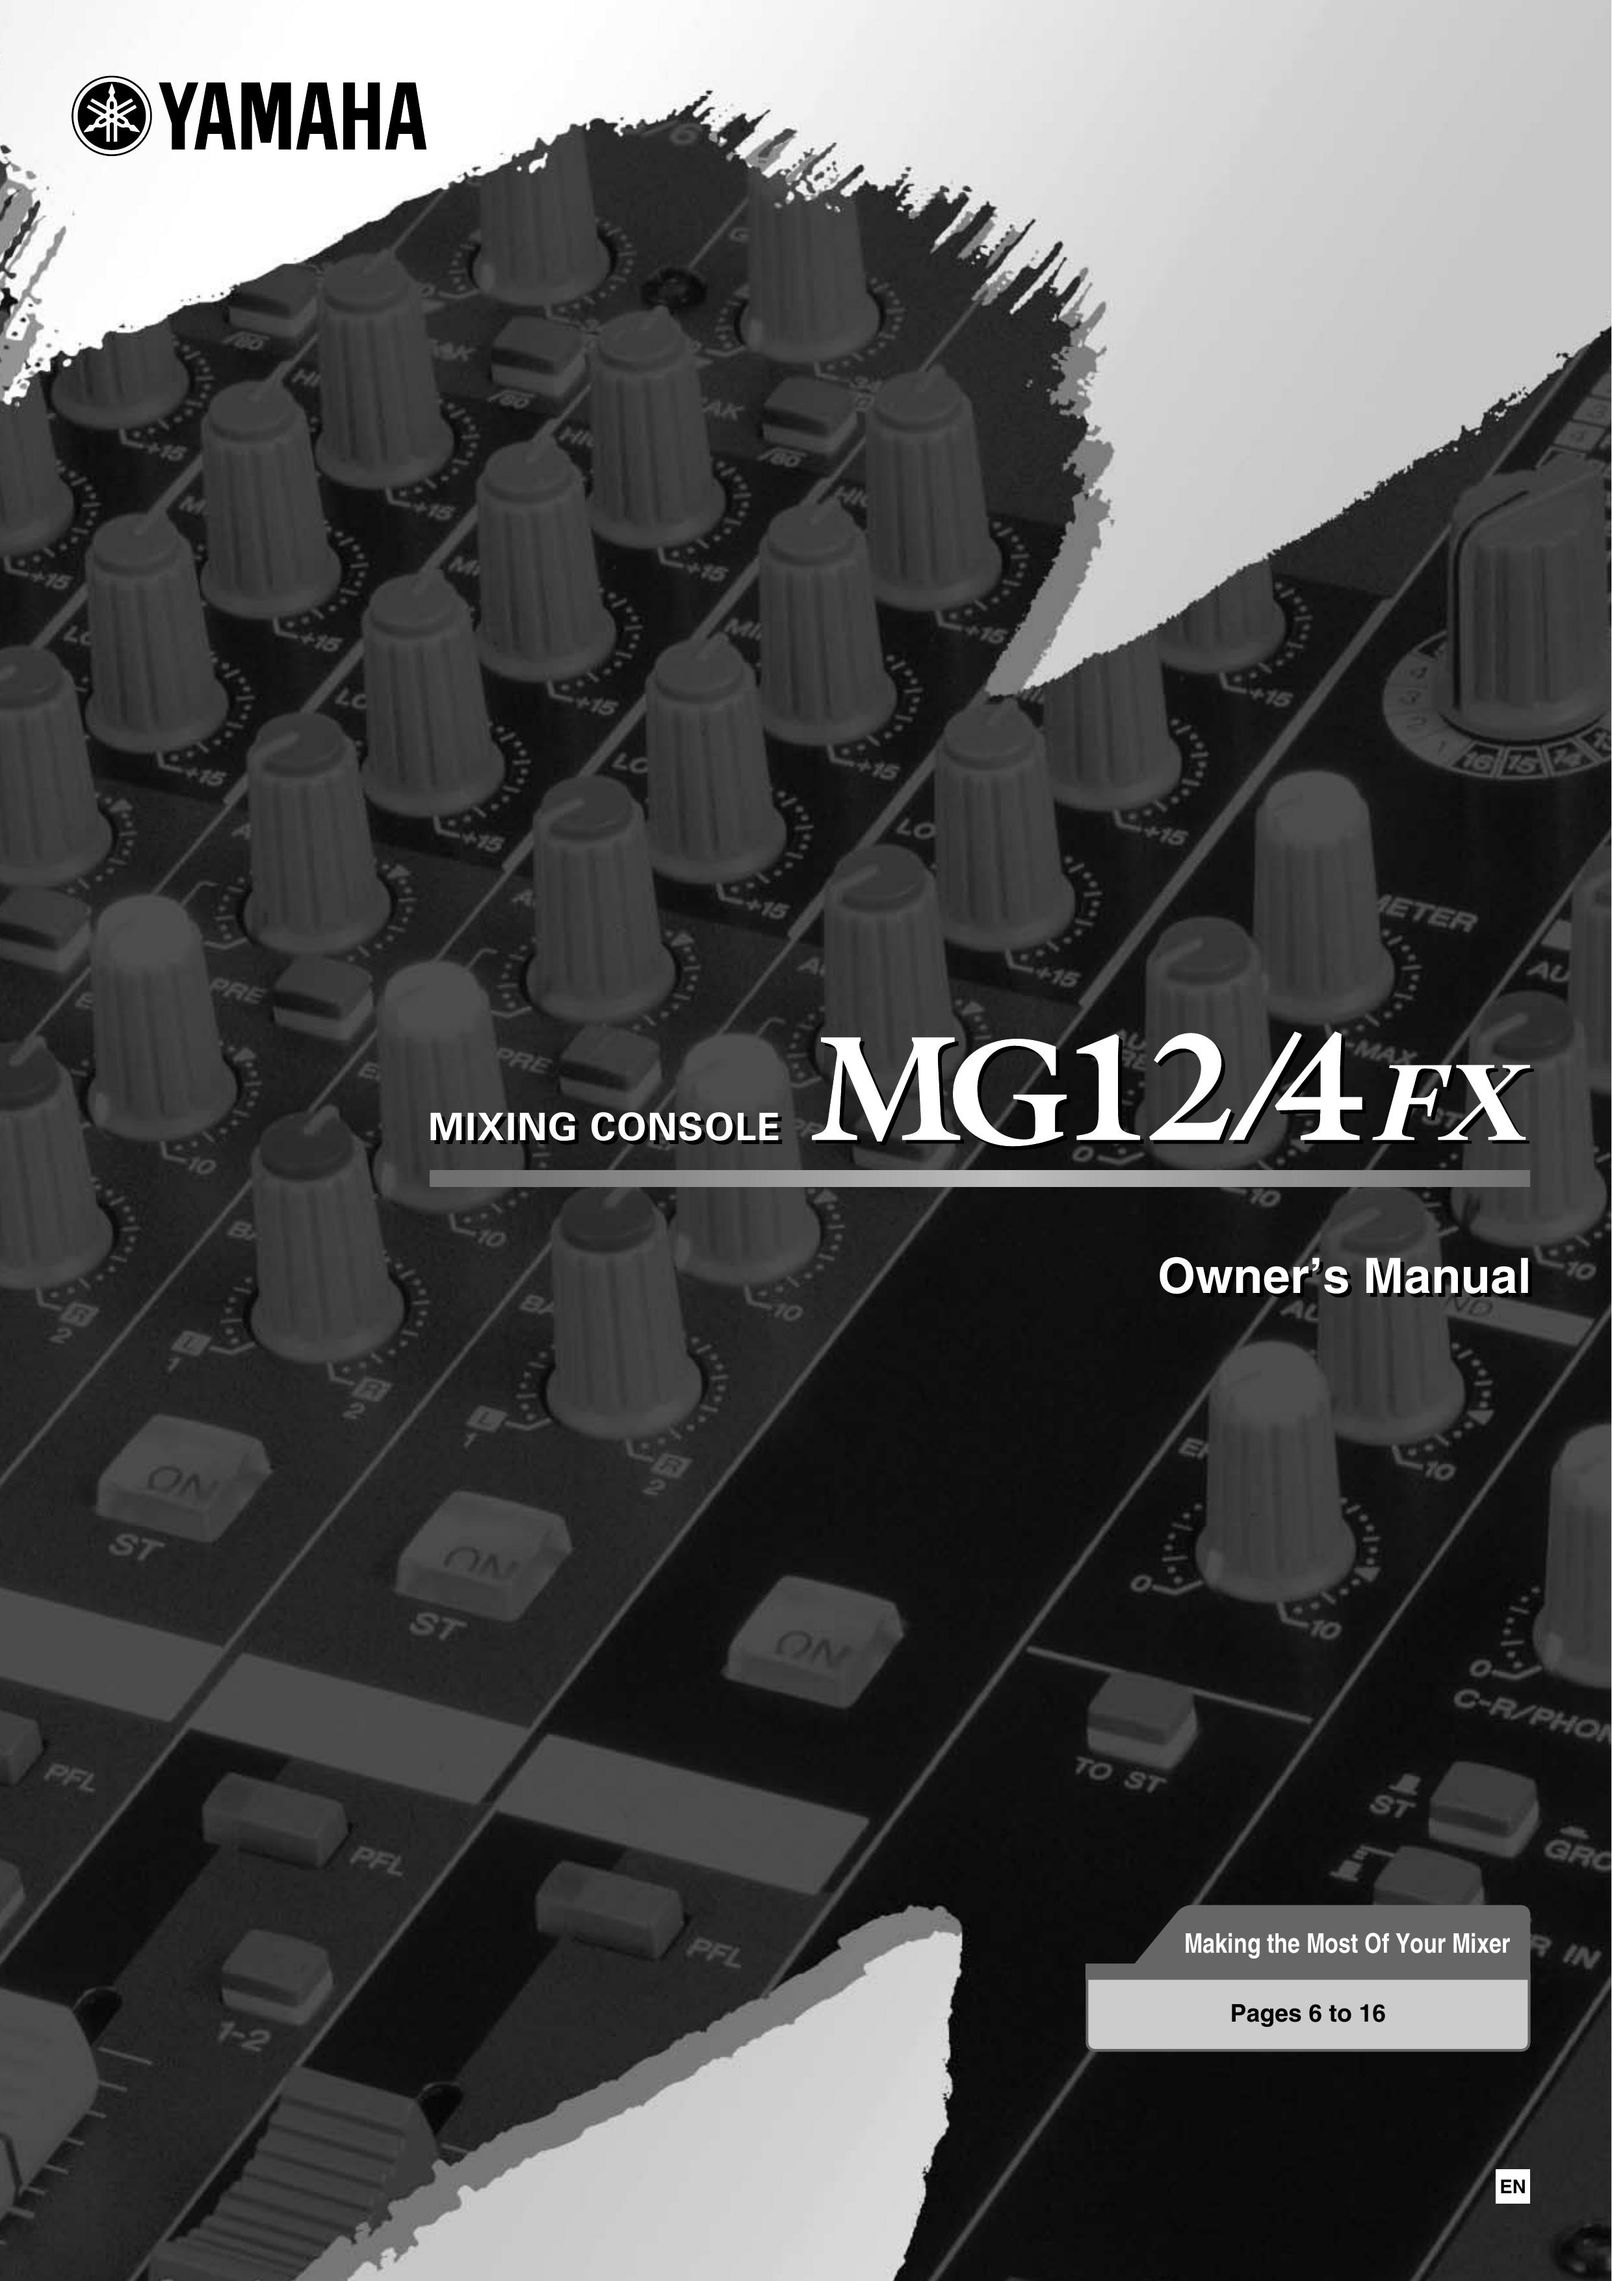 Yamaha MG12 Musical Toy Instrument User Manual